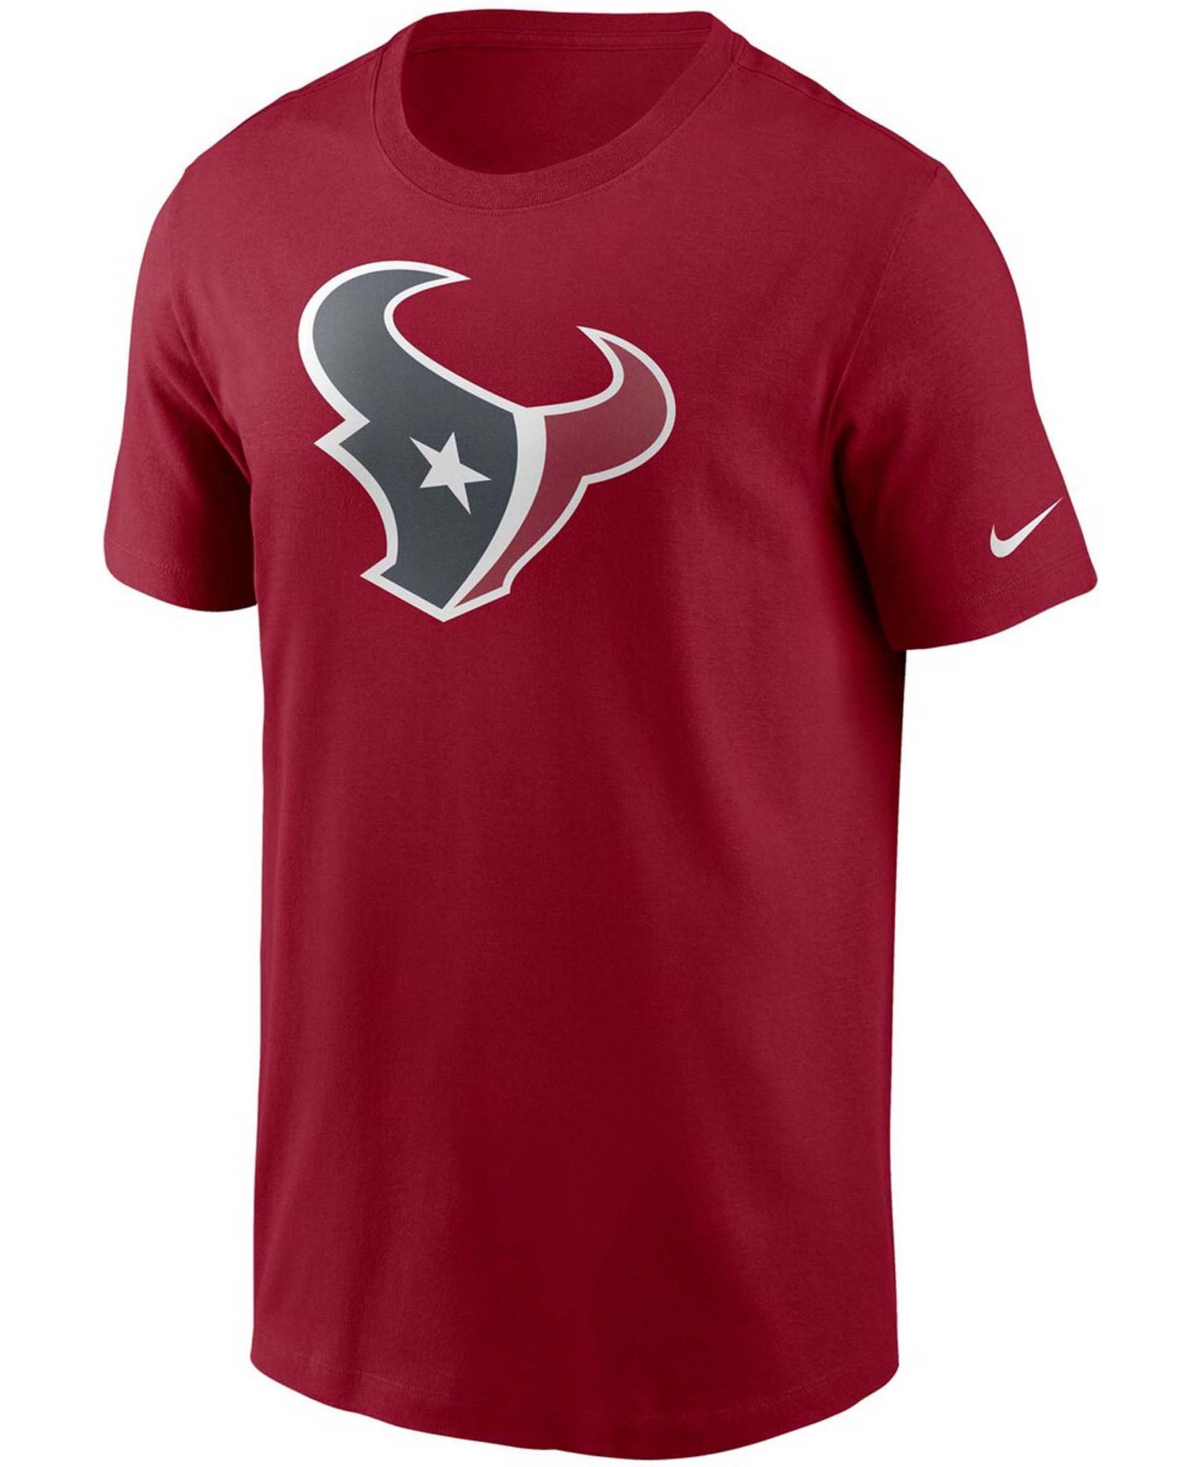 Shop Nike Men's Red Houston Texans Primary Logo T-shirt